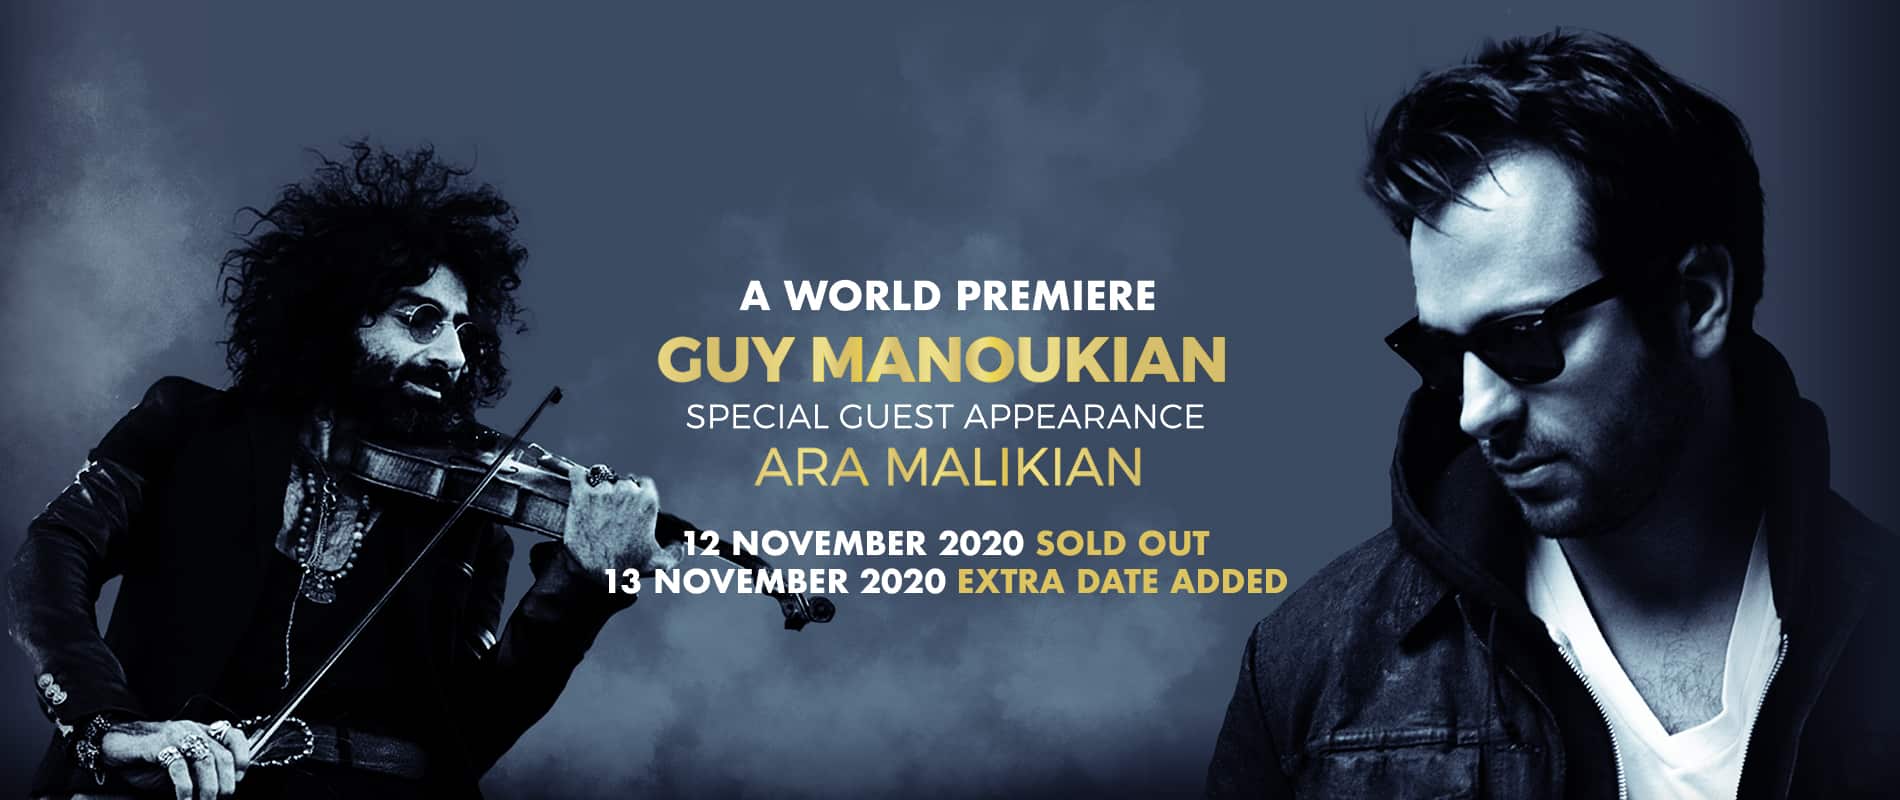 Guy Manoukian and Ara Malikian at Dubai Opera - Coming Soon in UAE